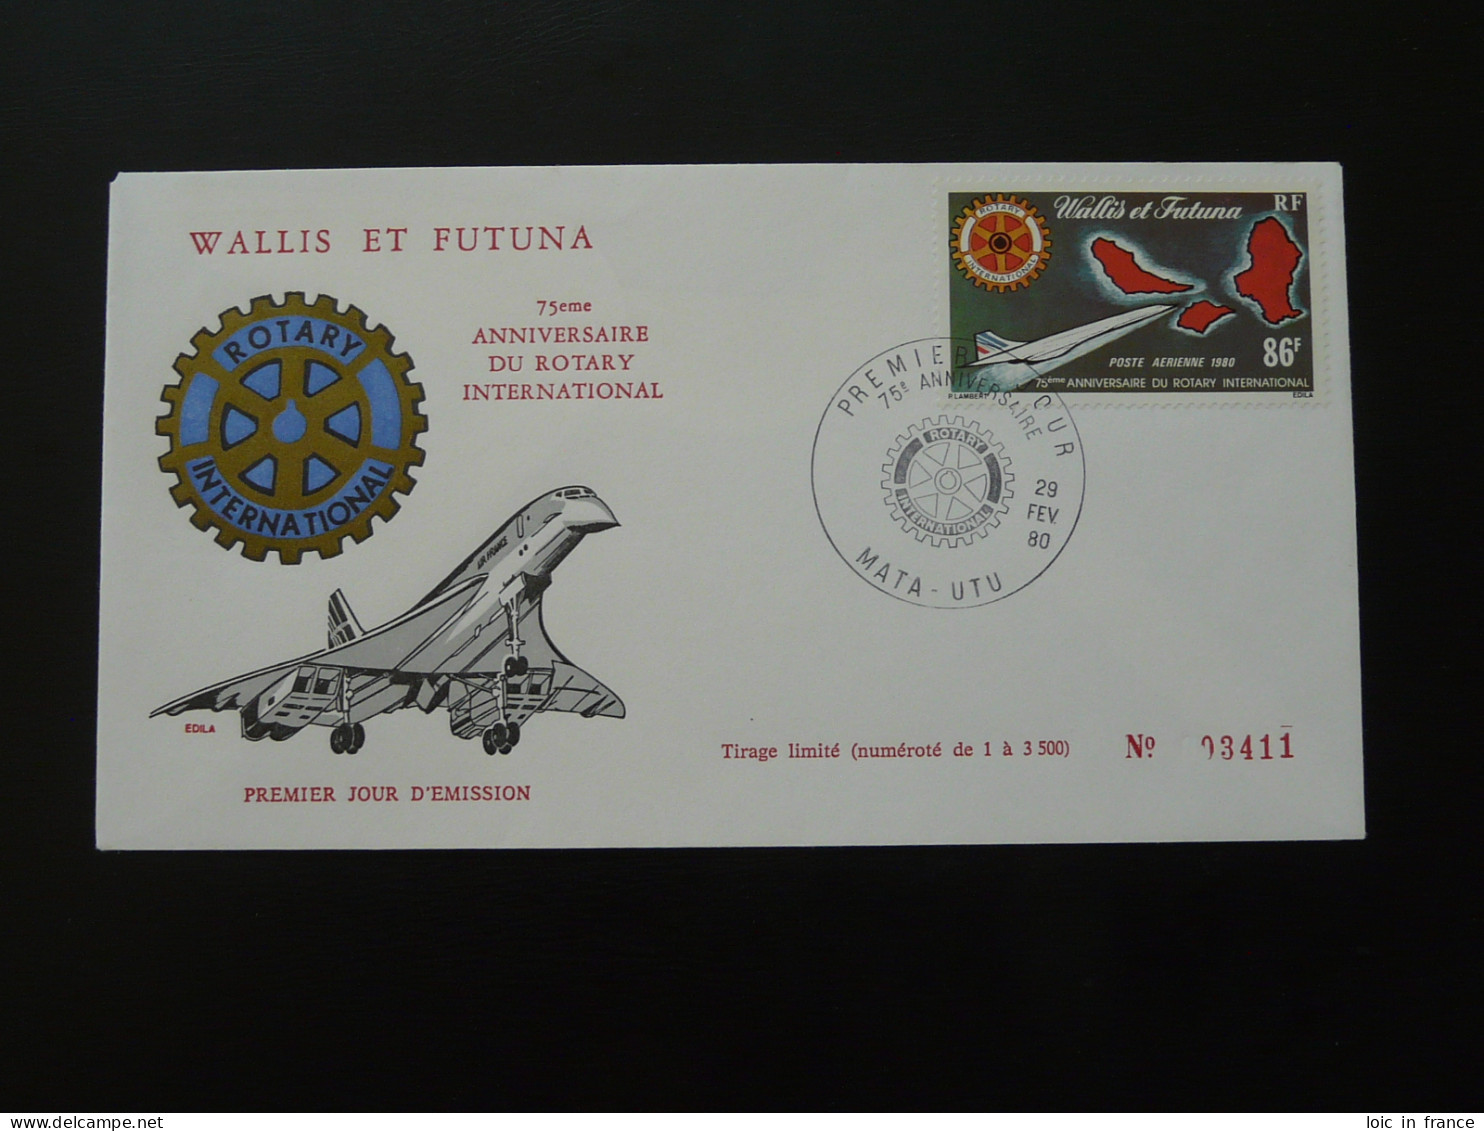 FDC Concorde 75 Years Rotary International Wallis & Futuna 1980 (Mata-Utu) - FDC